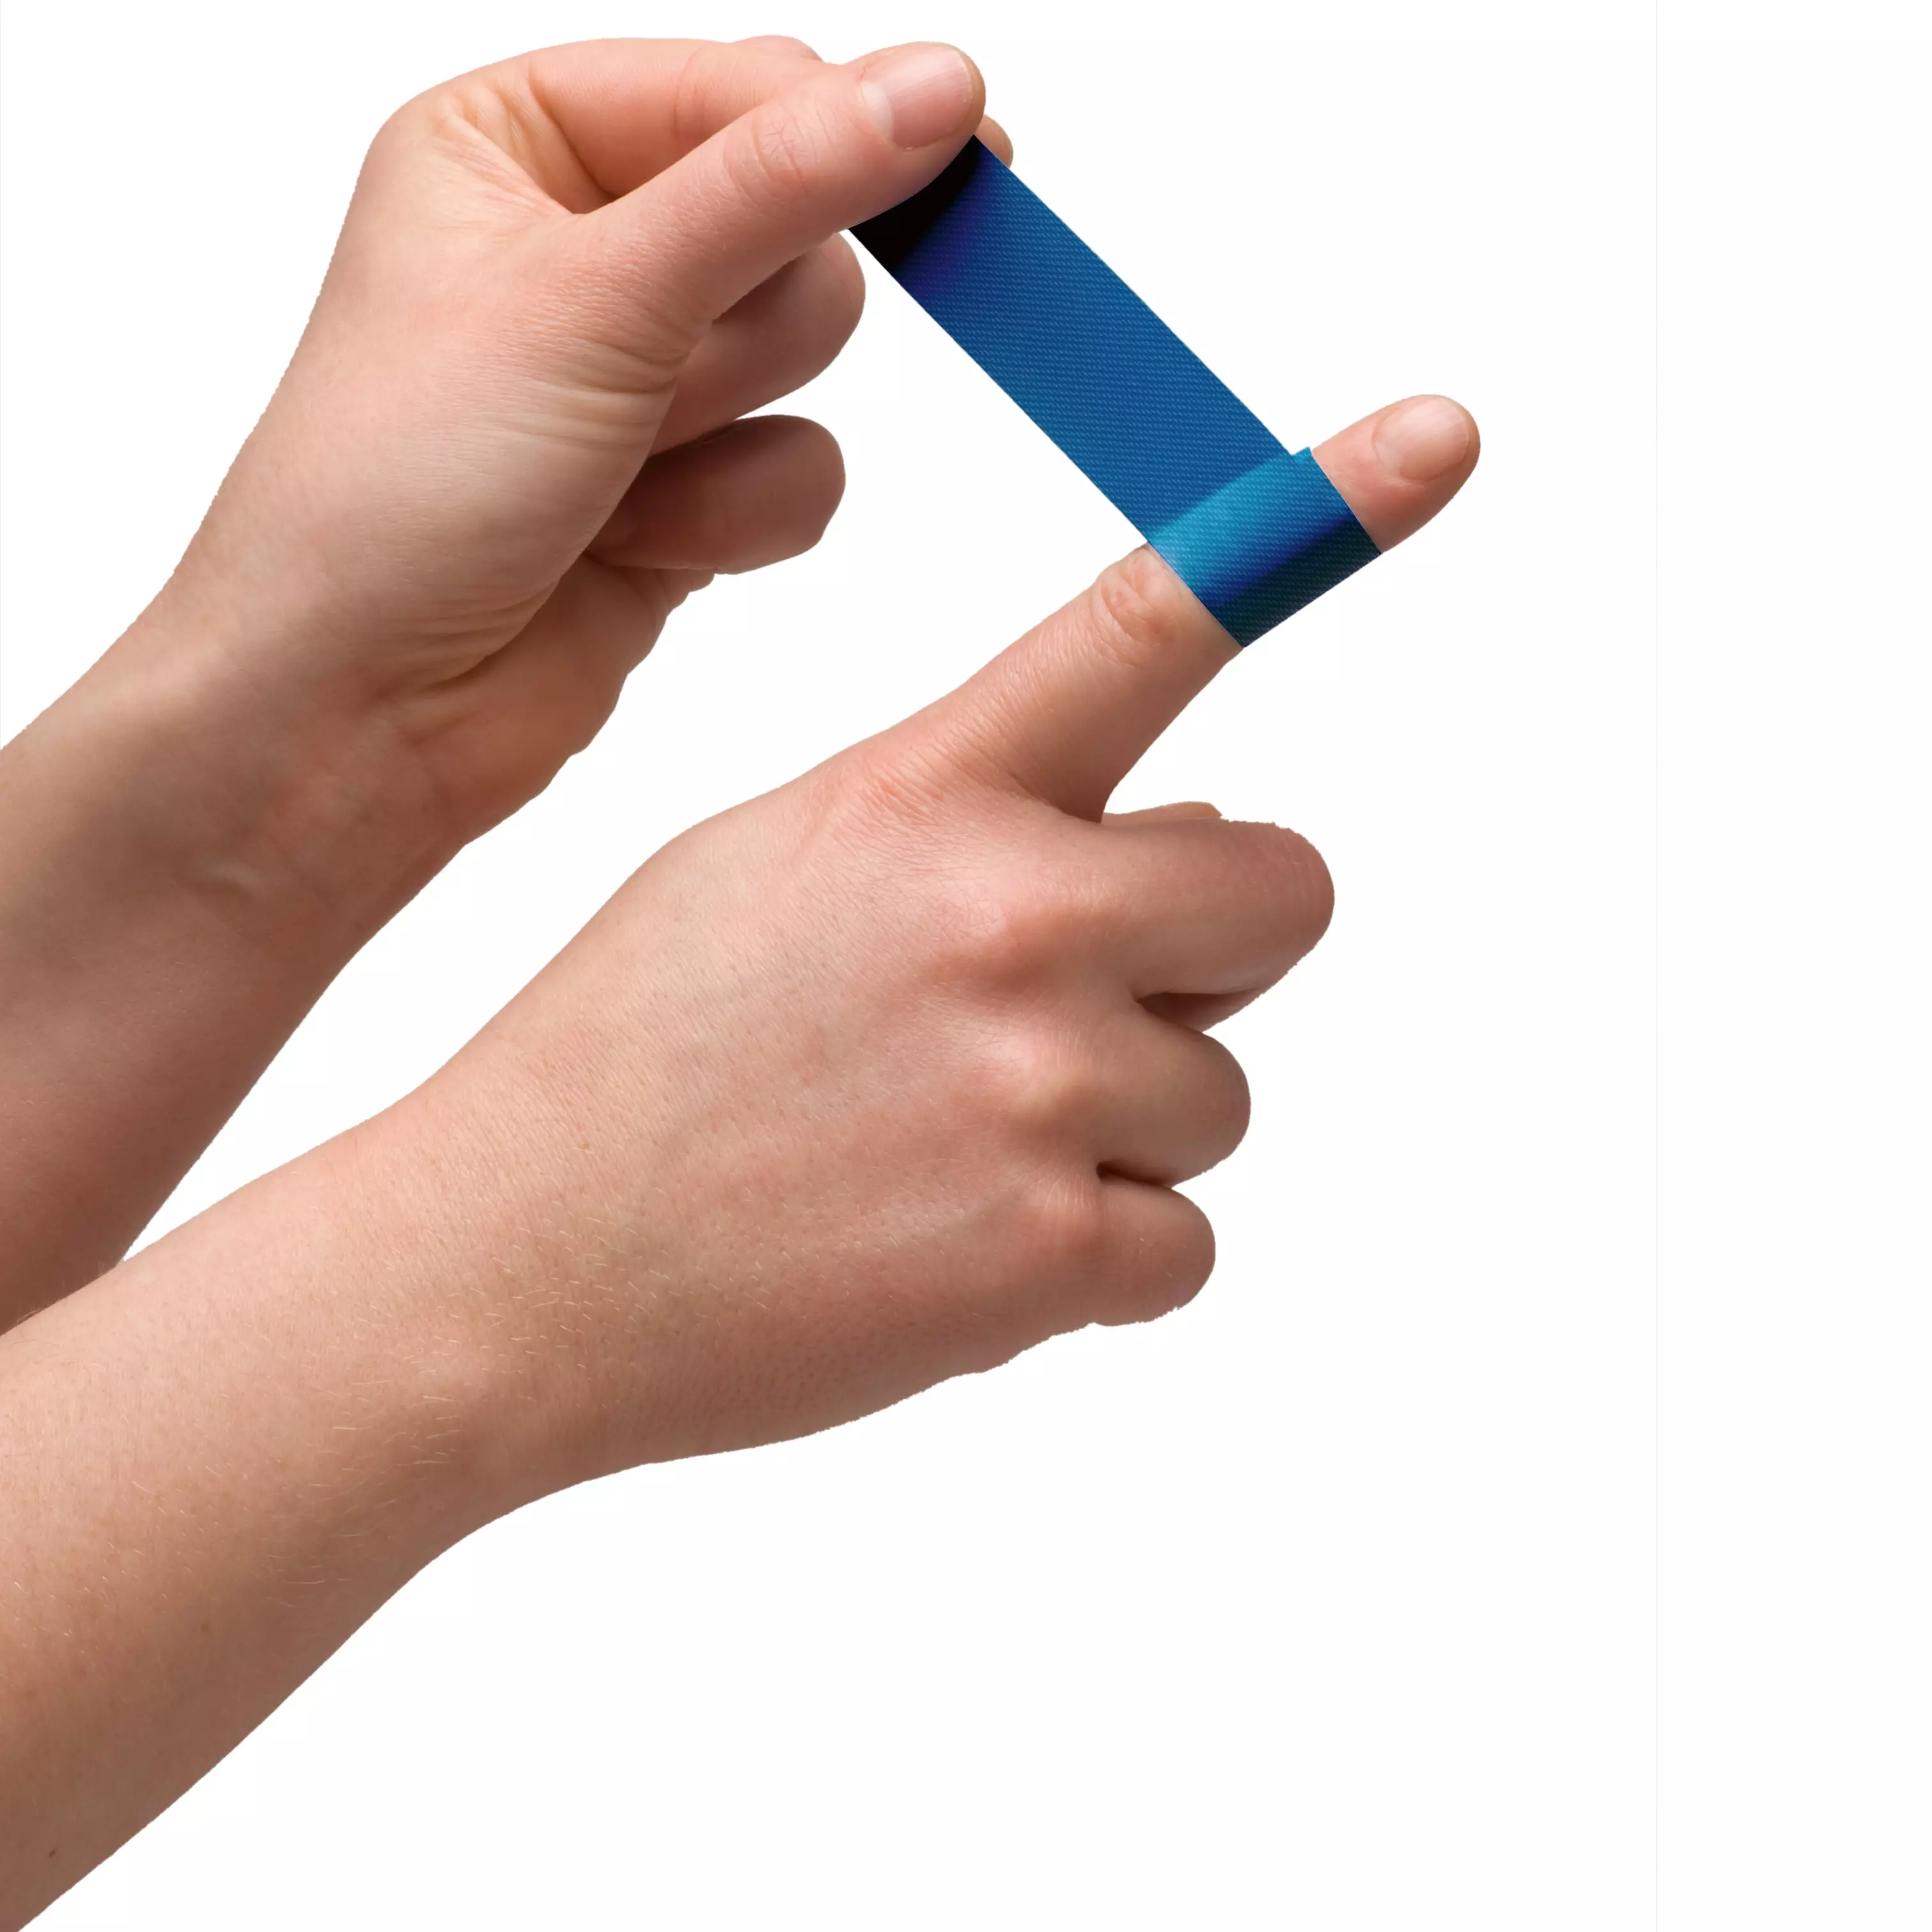 Weroplast® PowerDetect finger plasters - 2 cm, 12 cm